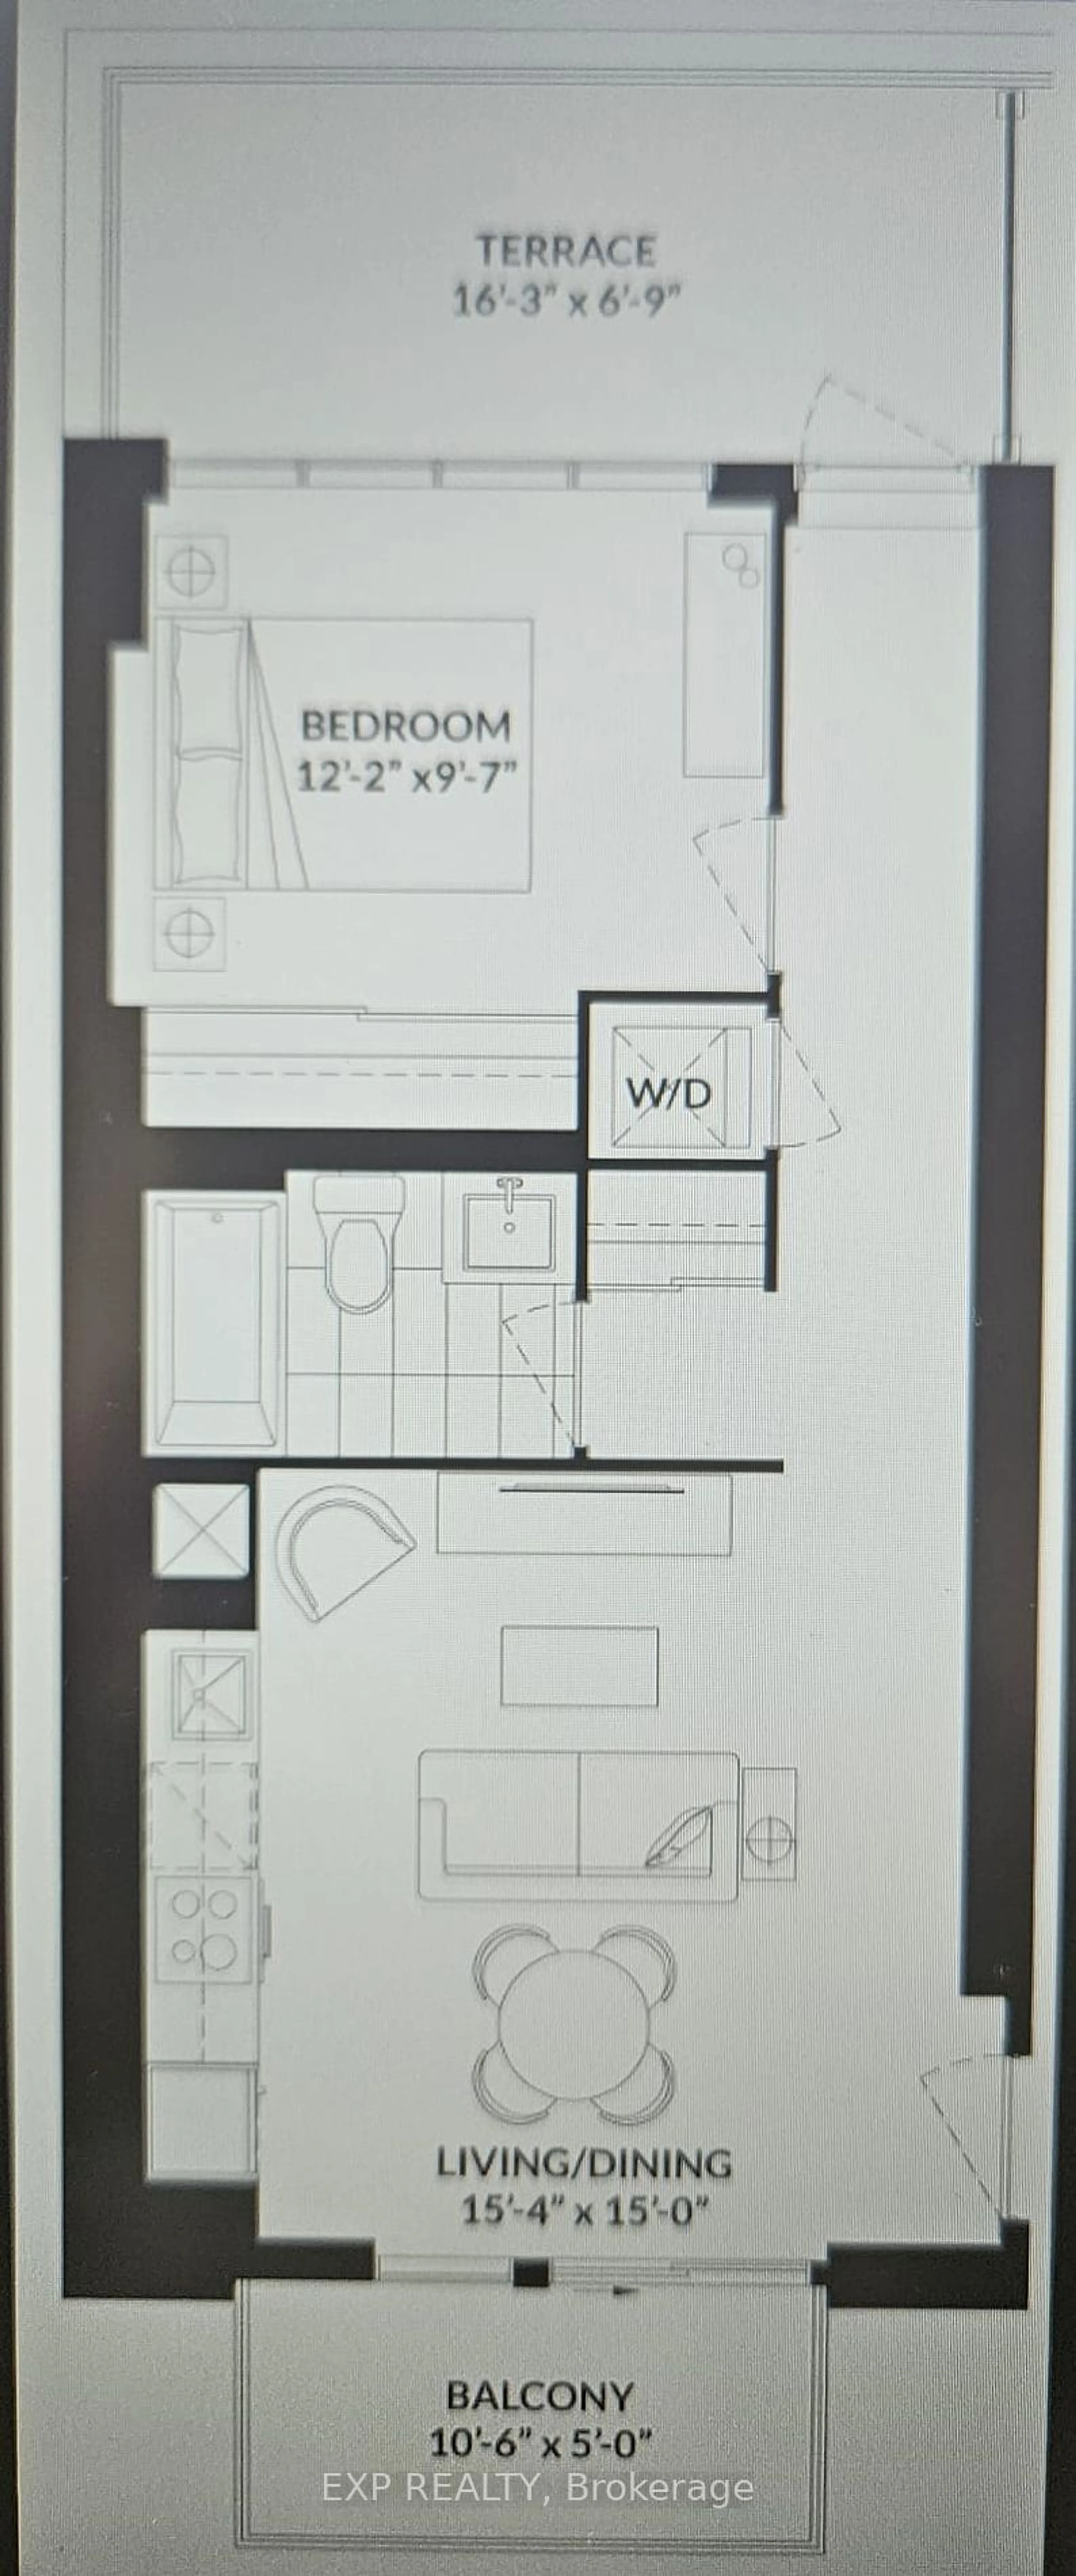 Floor plan for 2300 St Clair Ave #527, Toronto Ontario M6N 1K8